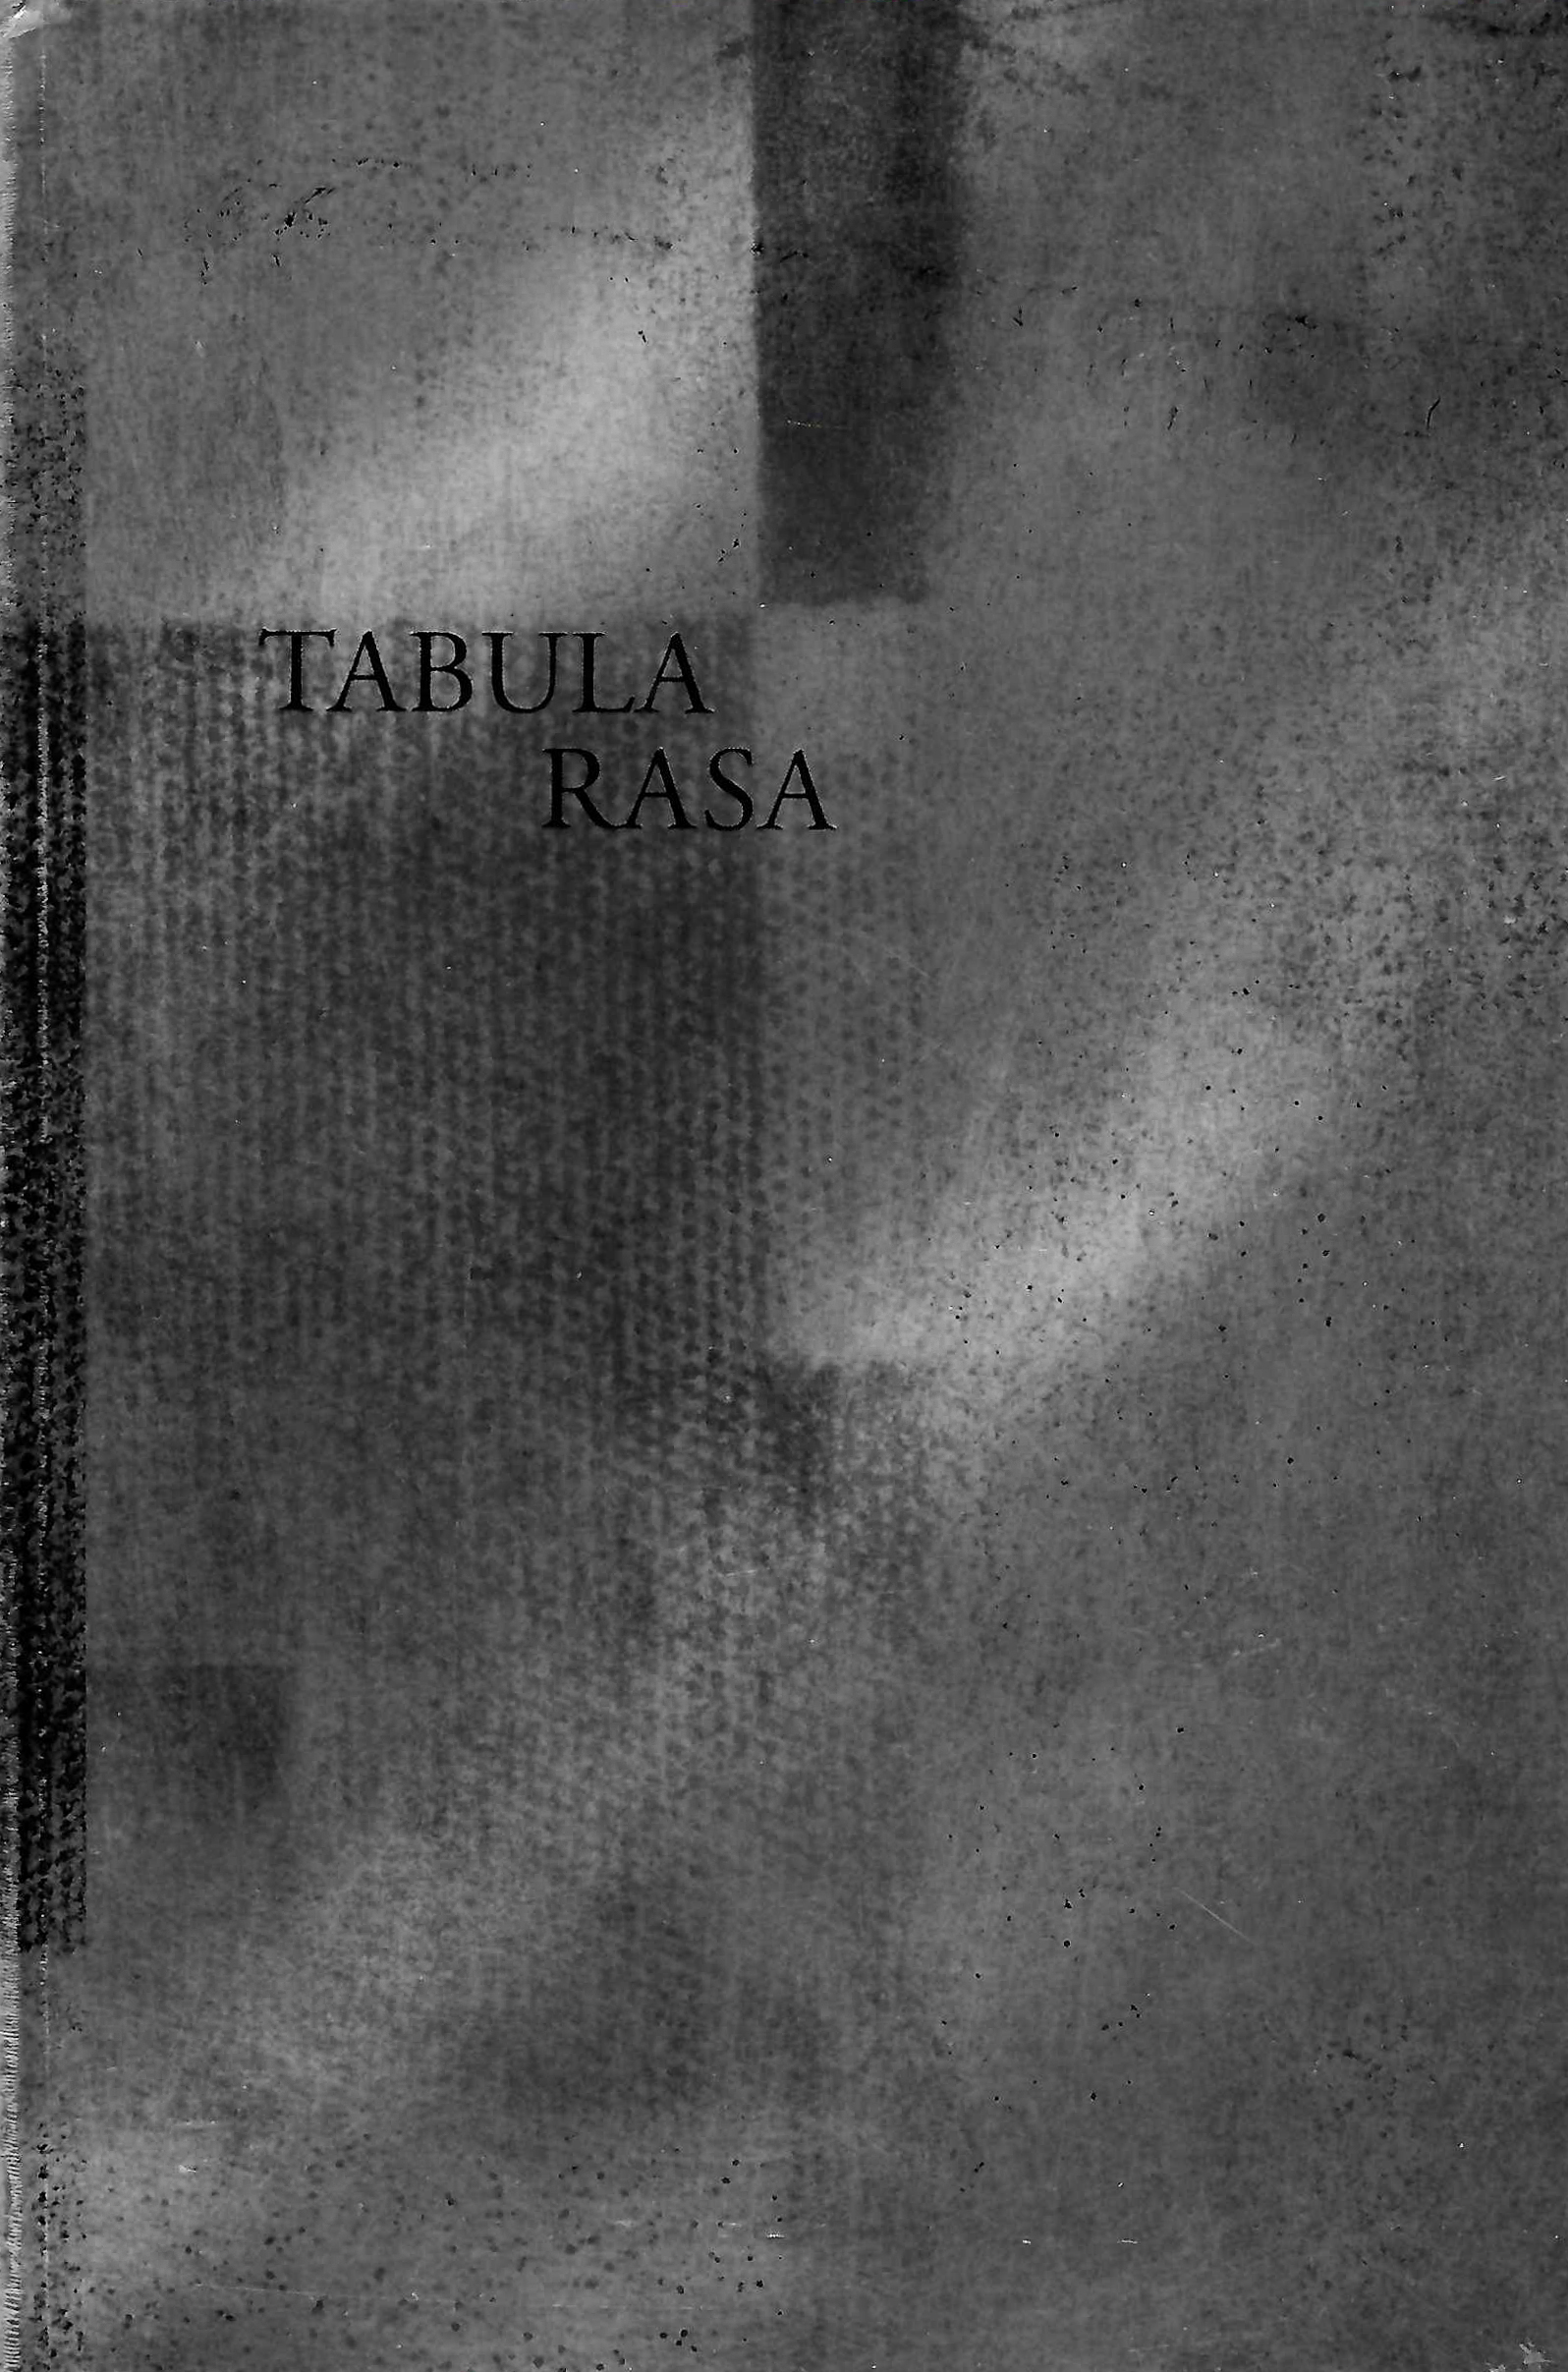 metalic silver book cover of Tabula Rasa